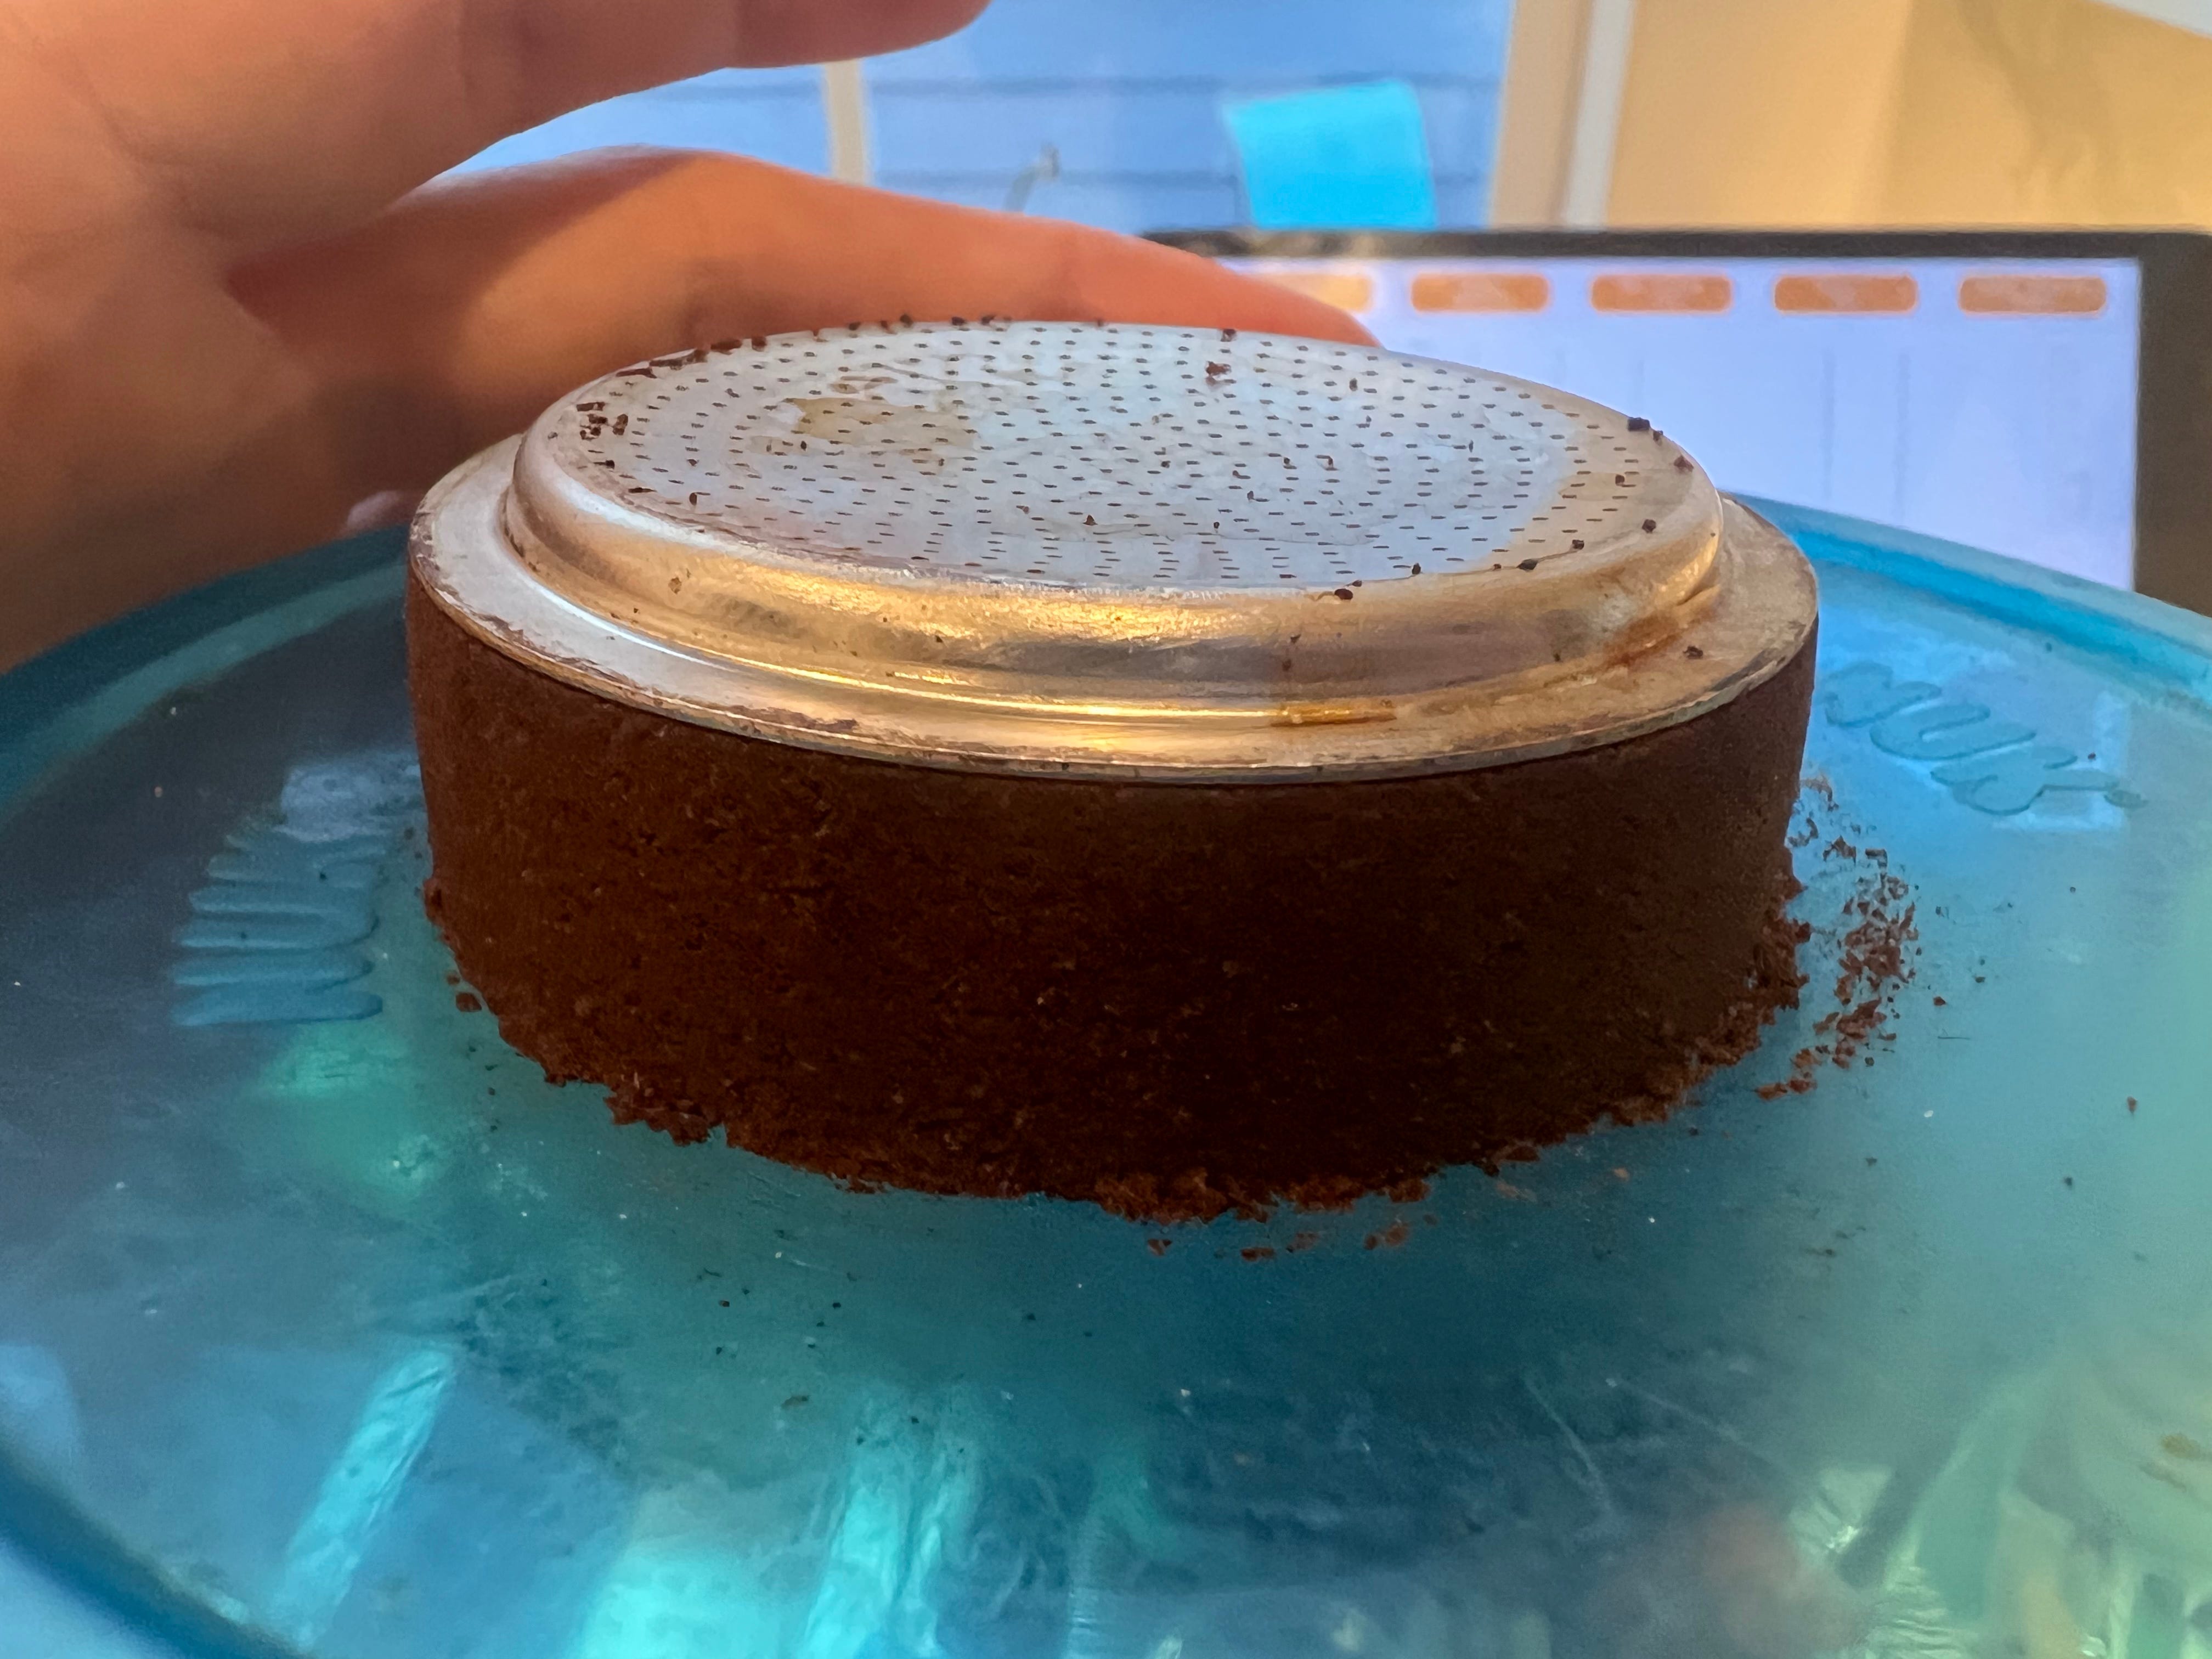 Moka Filter in an Espresso Basket, by Robert McKeon Aloe, Nerd For Tech